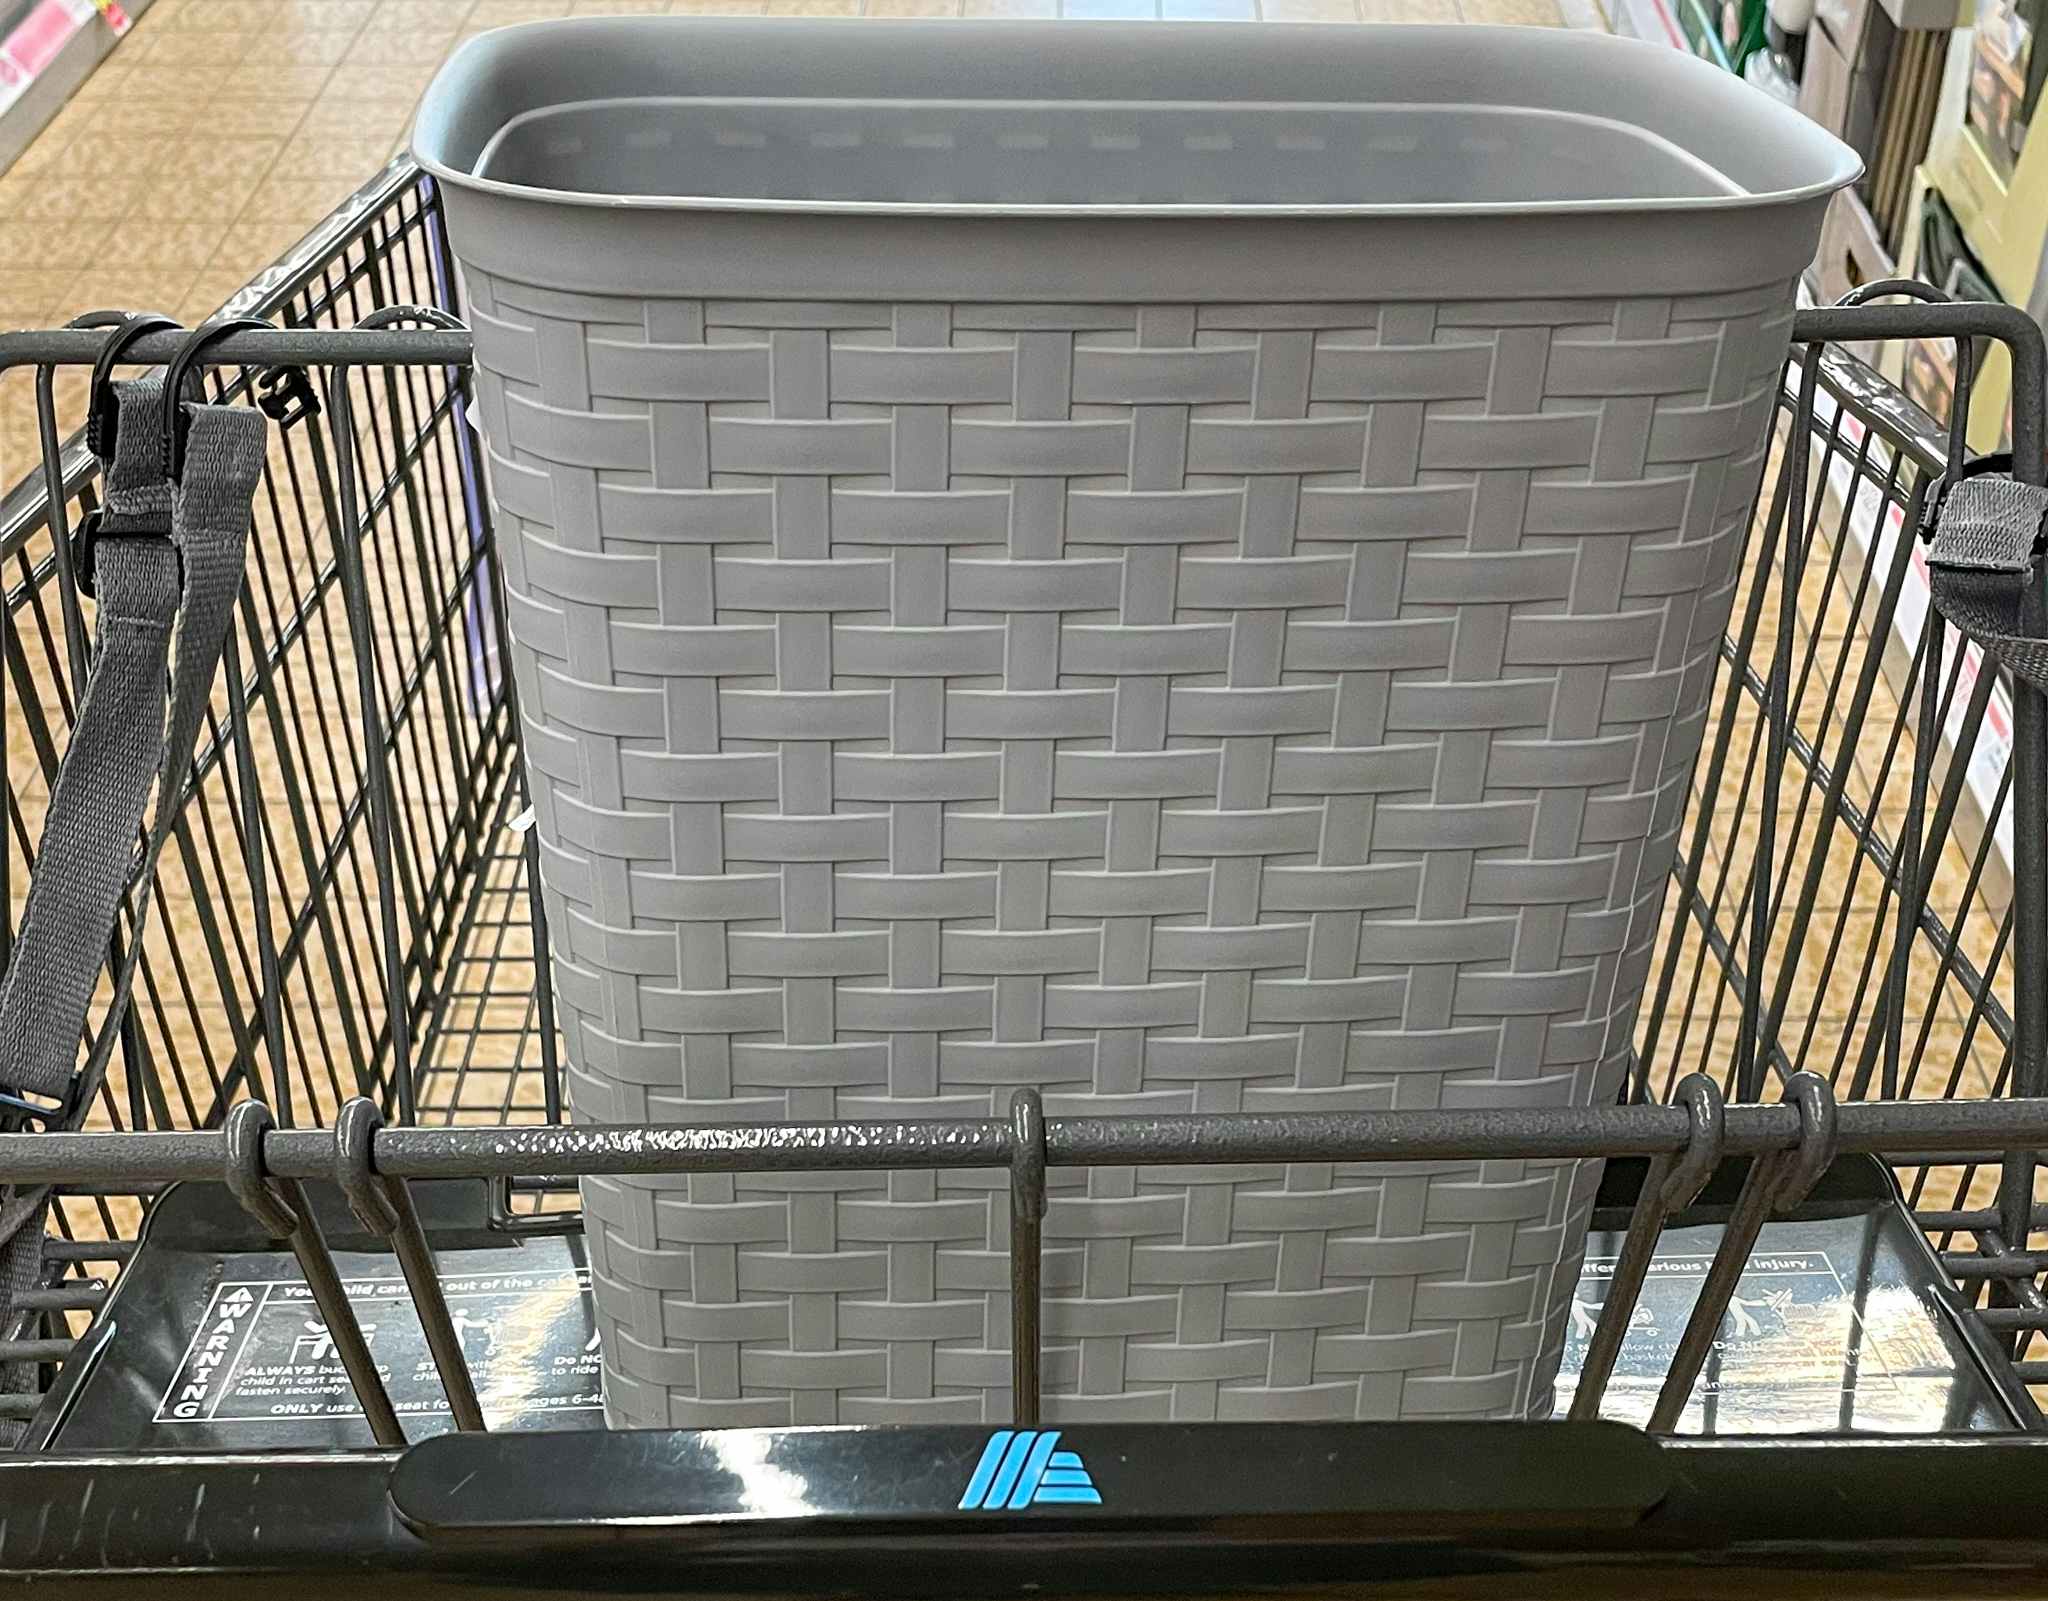 sterile wastebasket in a cart at aldi 